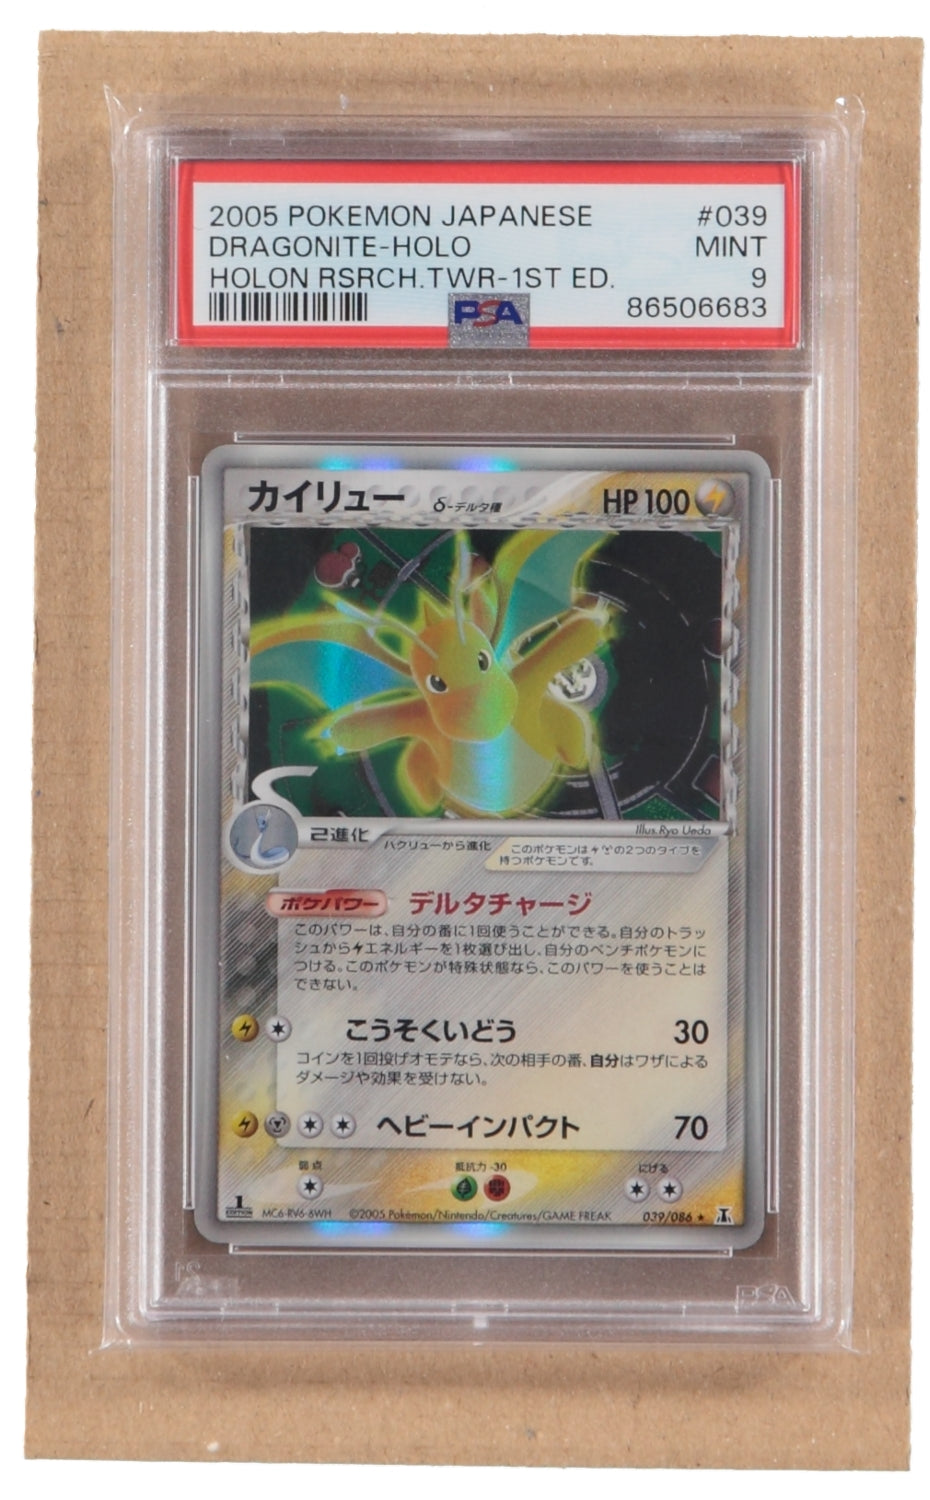 Graded Card - Pokemon JPN Dragonite Holo 039 2005 Holon Research MINT 9